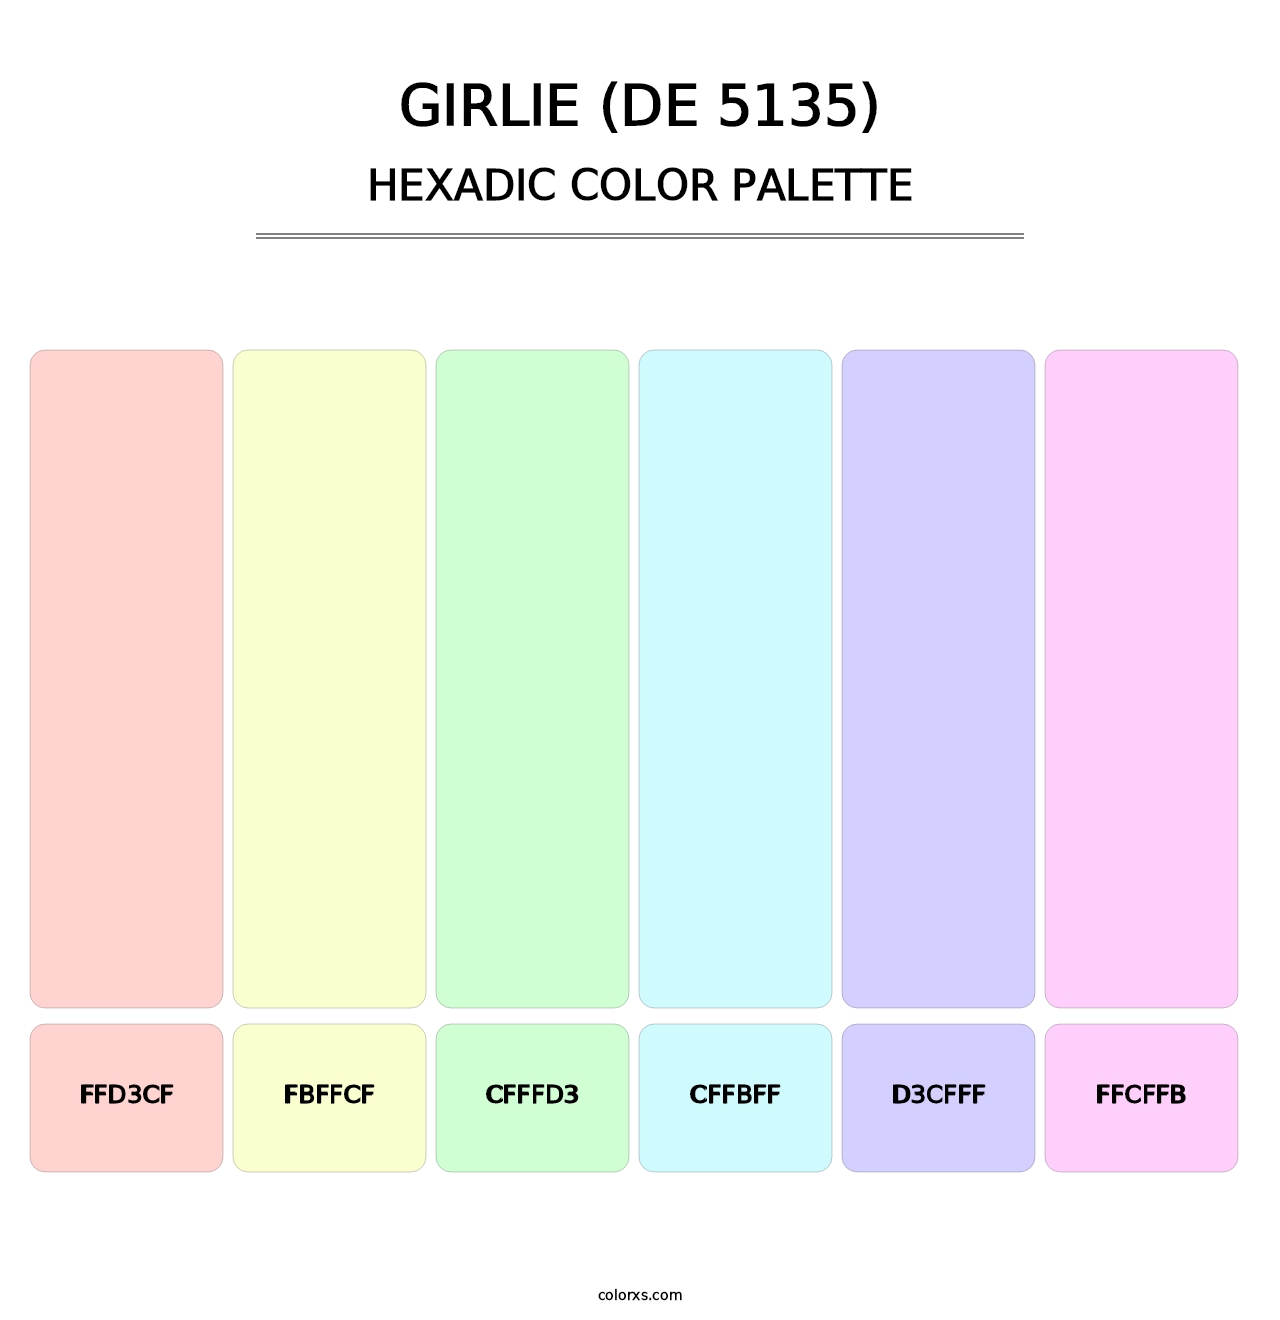 Girlie (DE 5135) - Hexadic Color Palette